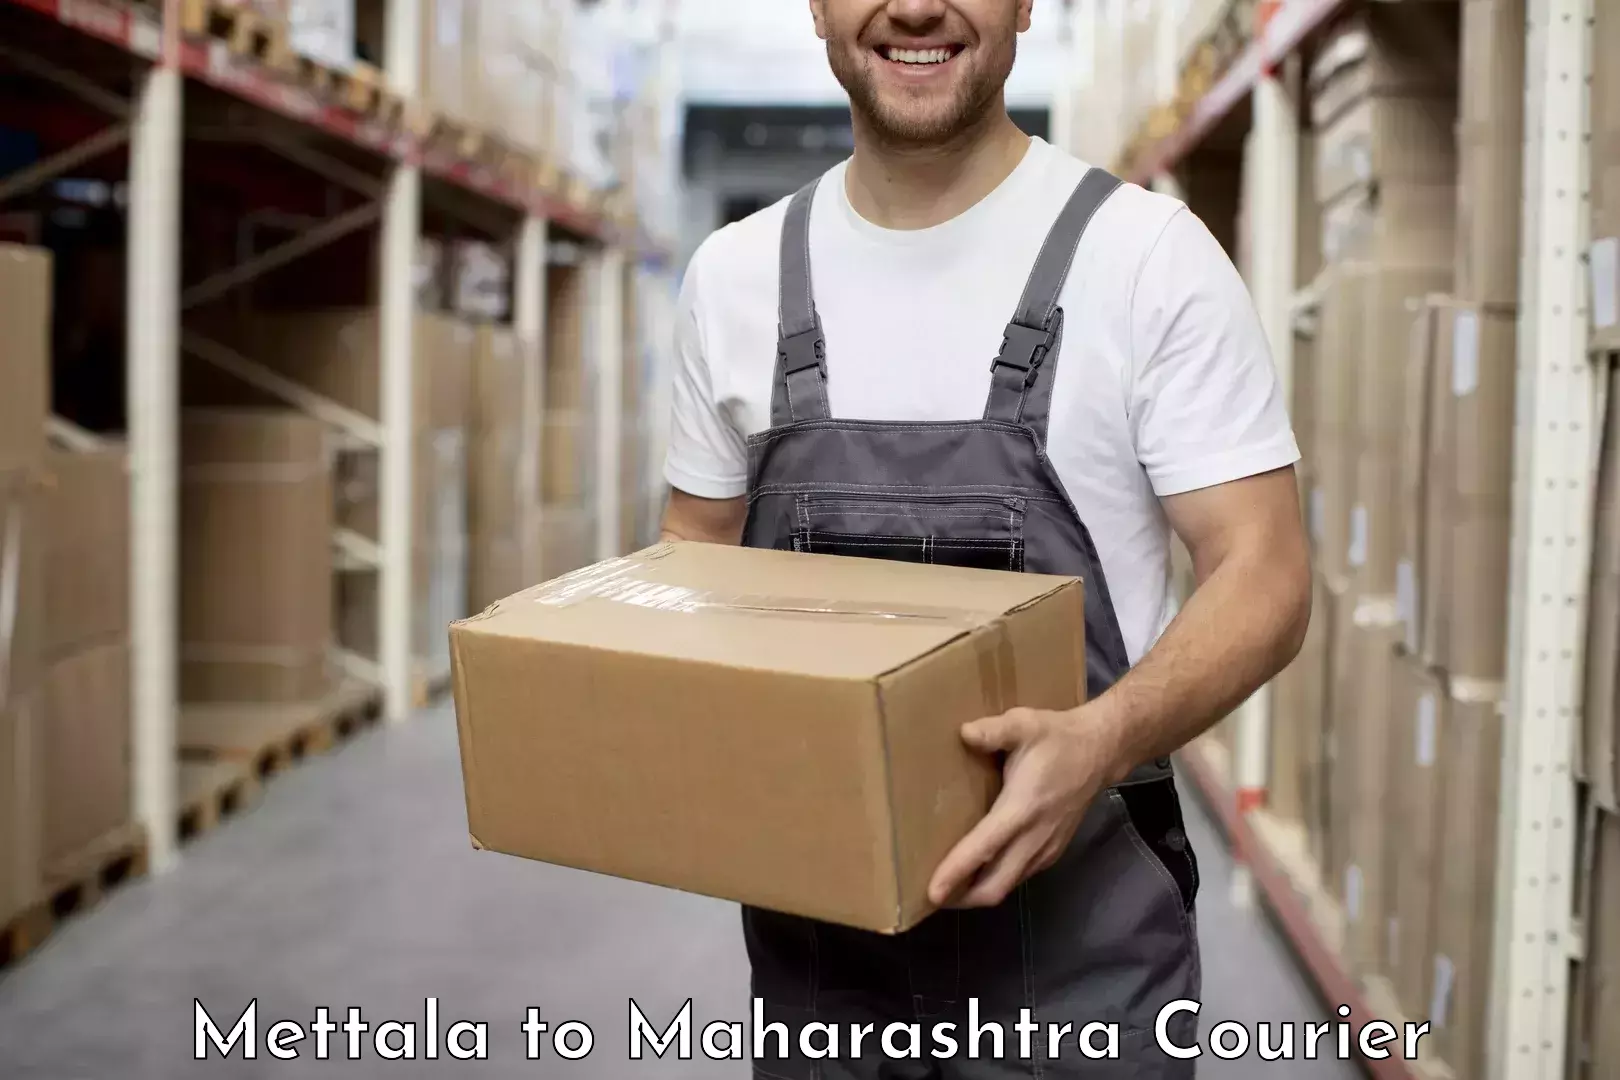 Courier service comparison Mettala to Mumbai University